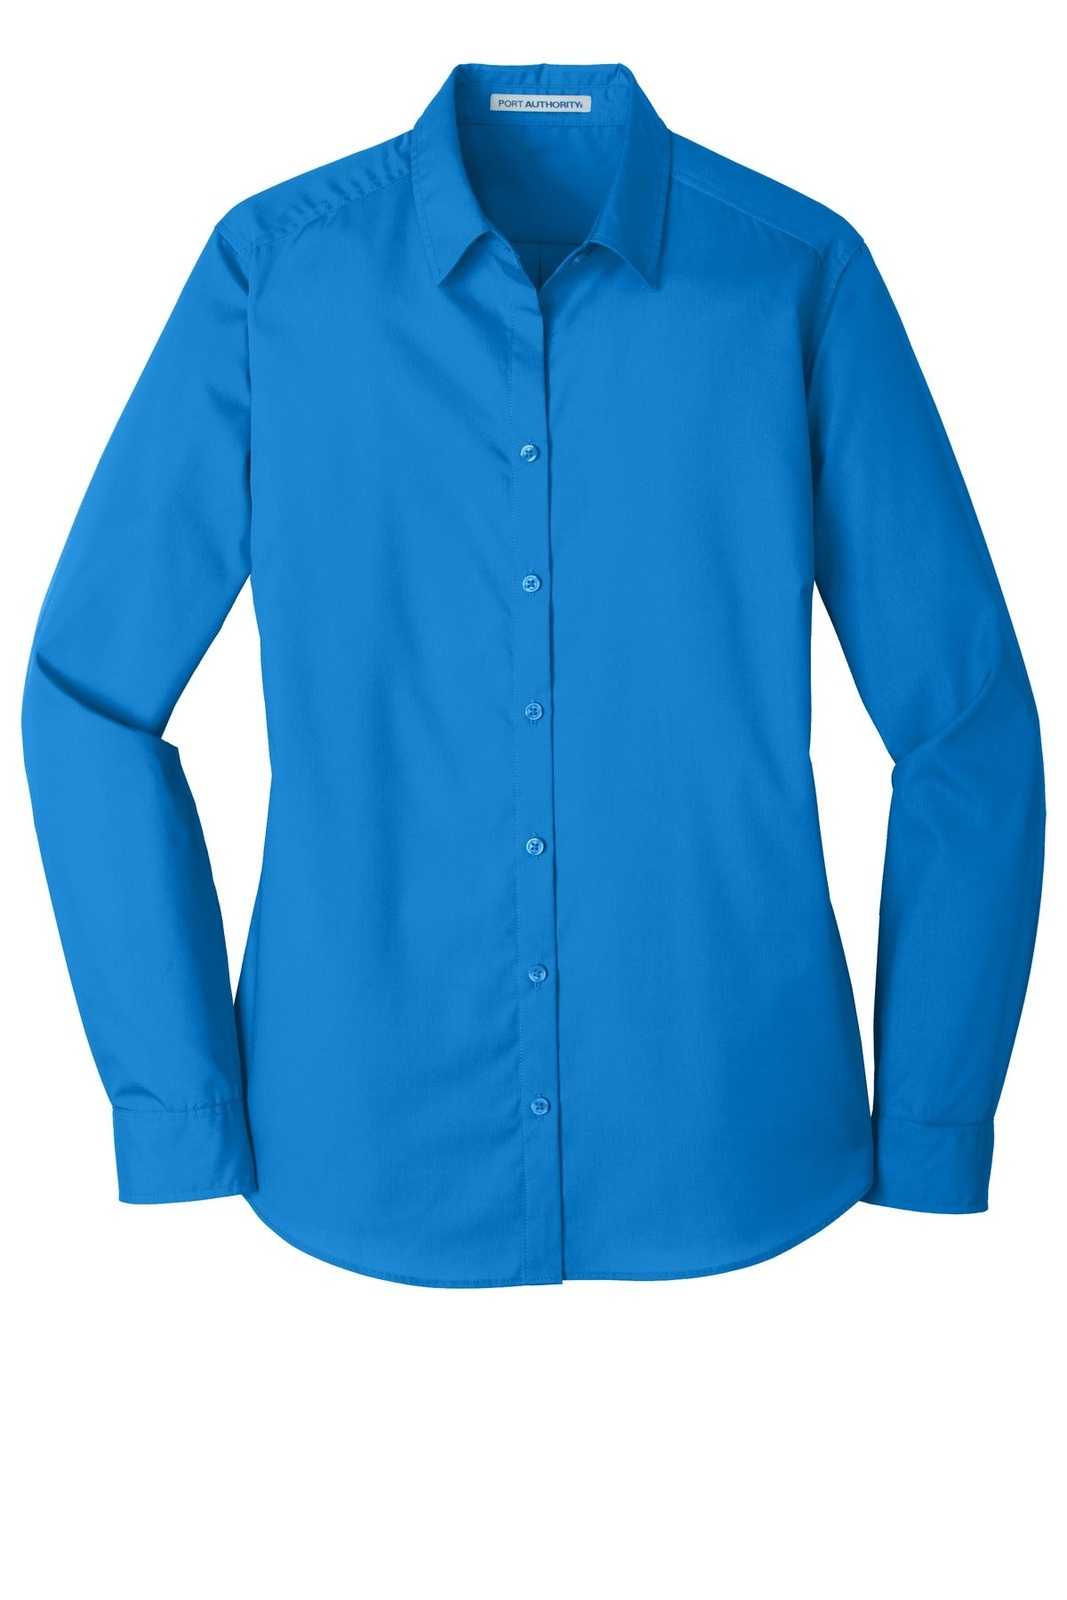 Port Authority LW100 Ladies Long Sleeve Carefree Poplin Shirt - Coastal Blue - HIT a Double - 5